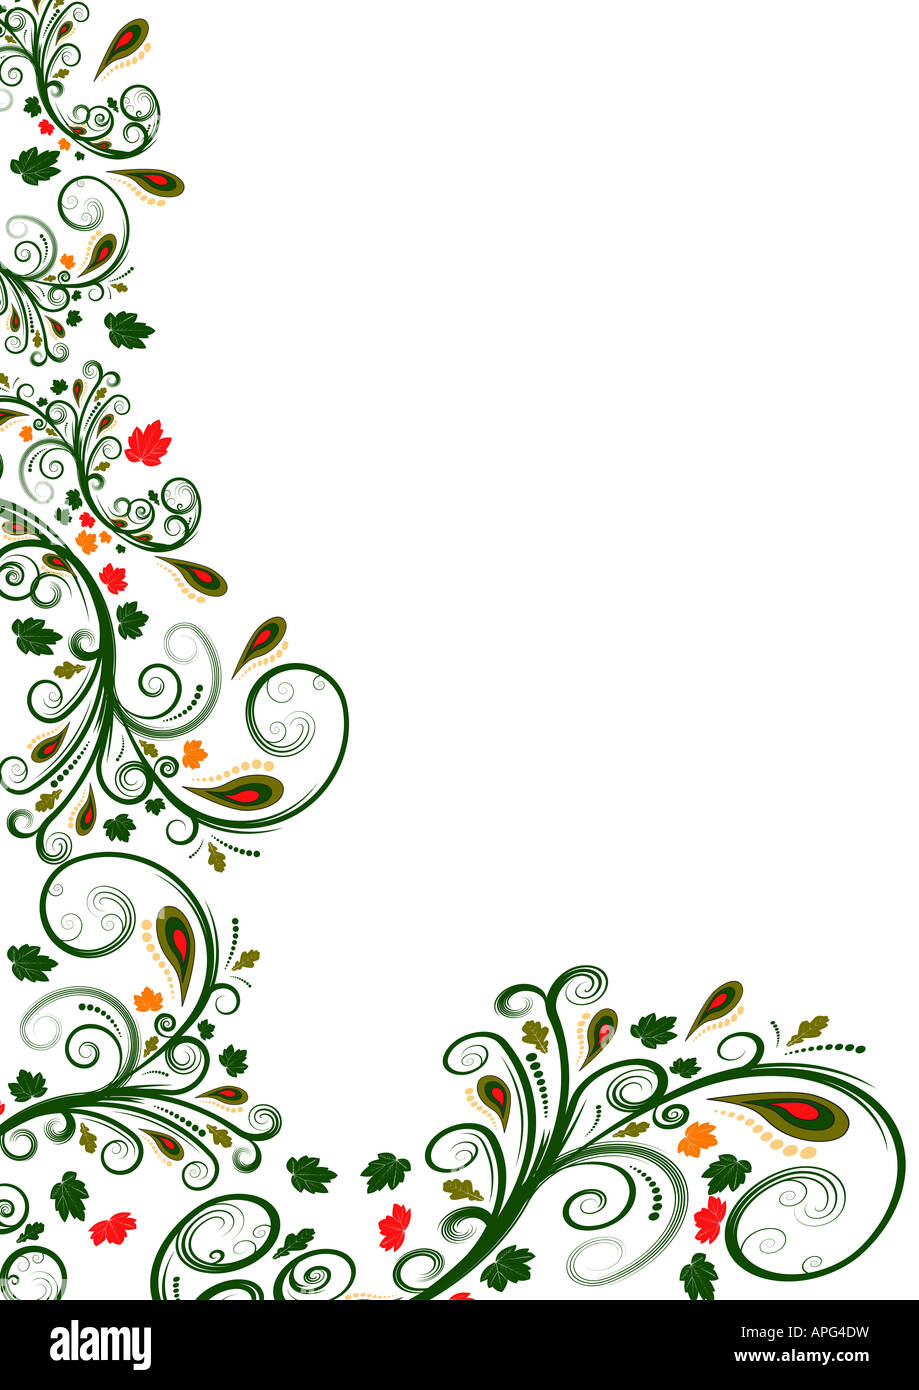 trendy vector floral border design Stock Photo